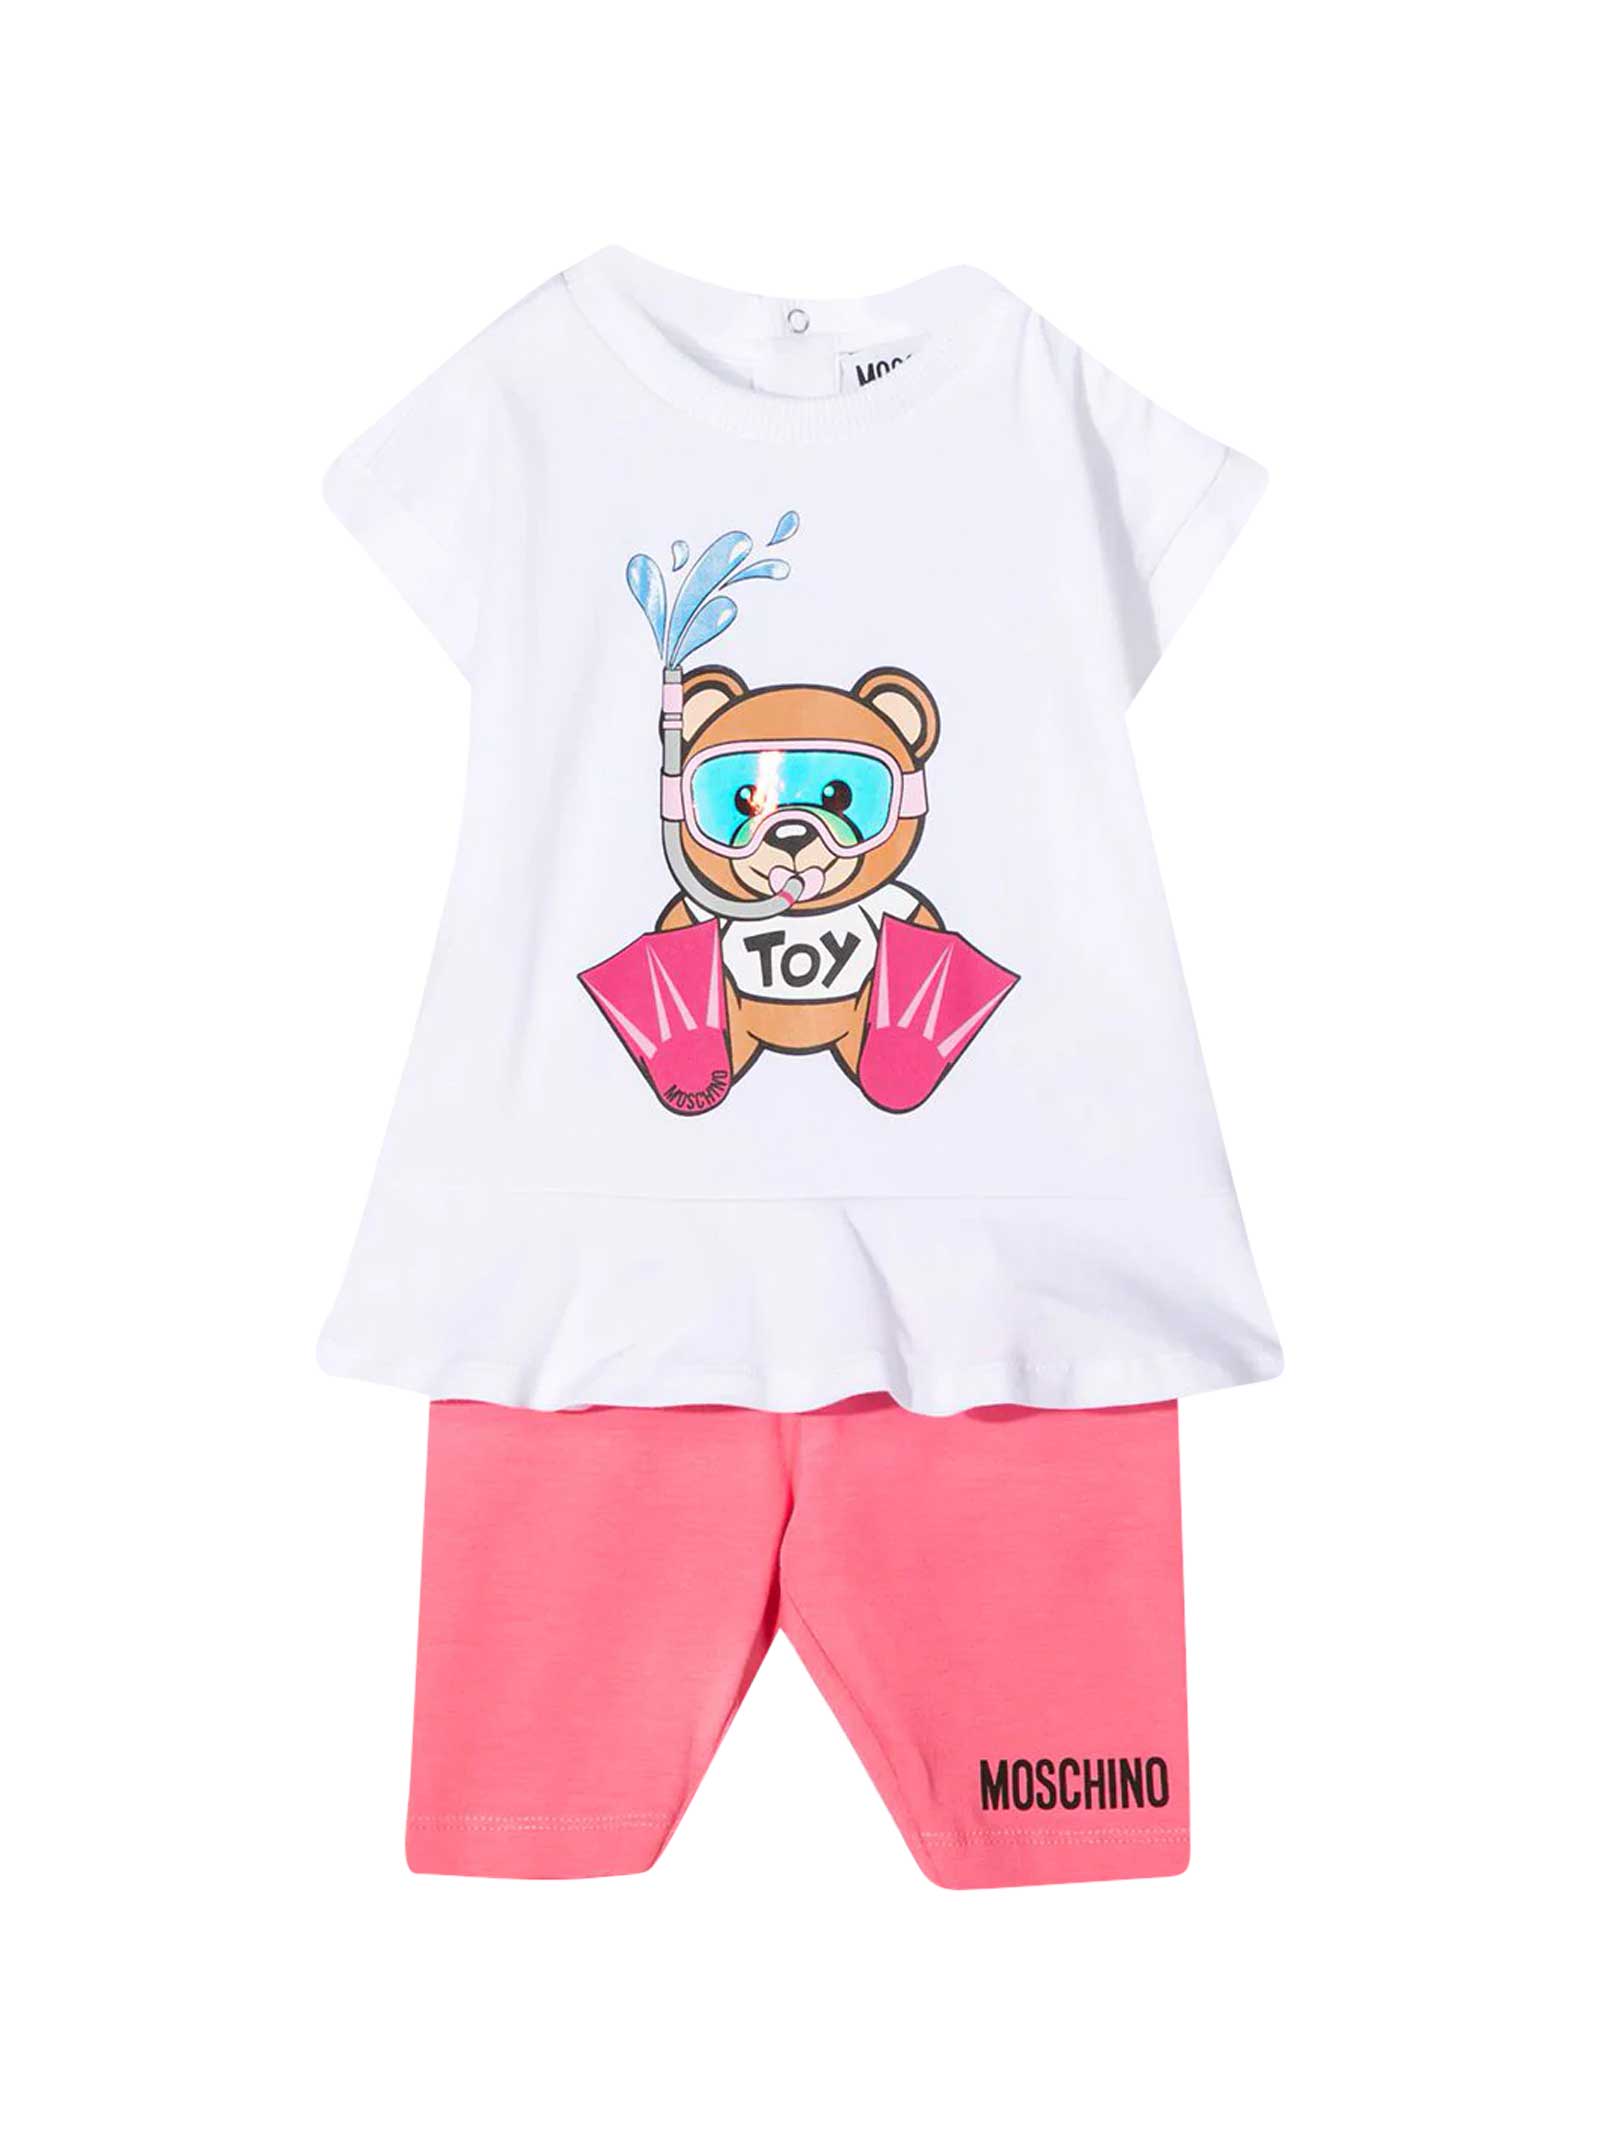 Moschino Newborn Outfit